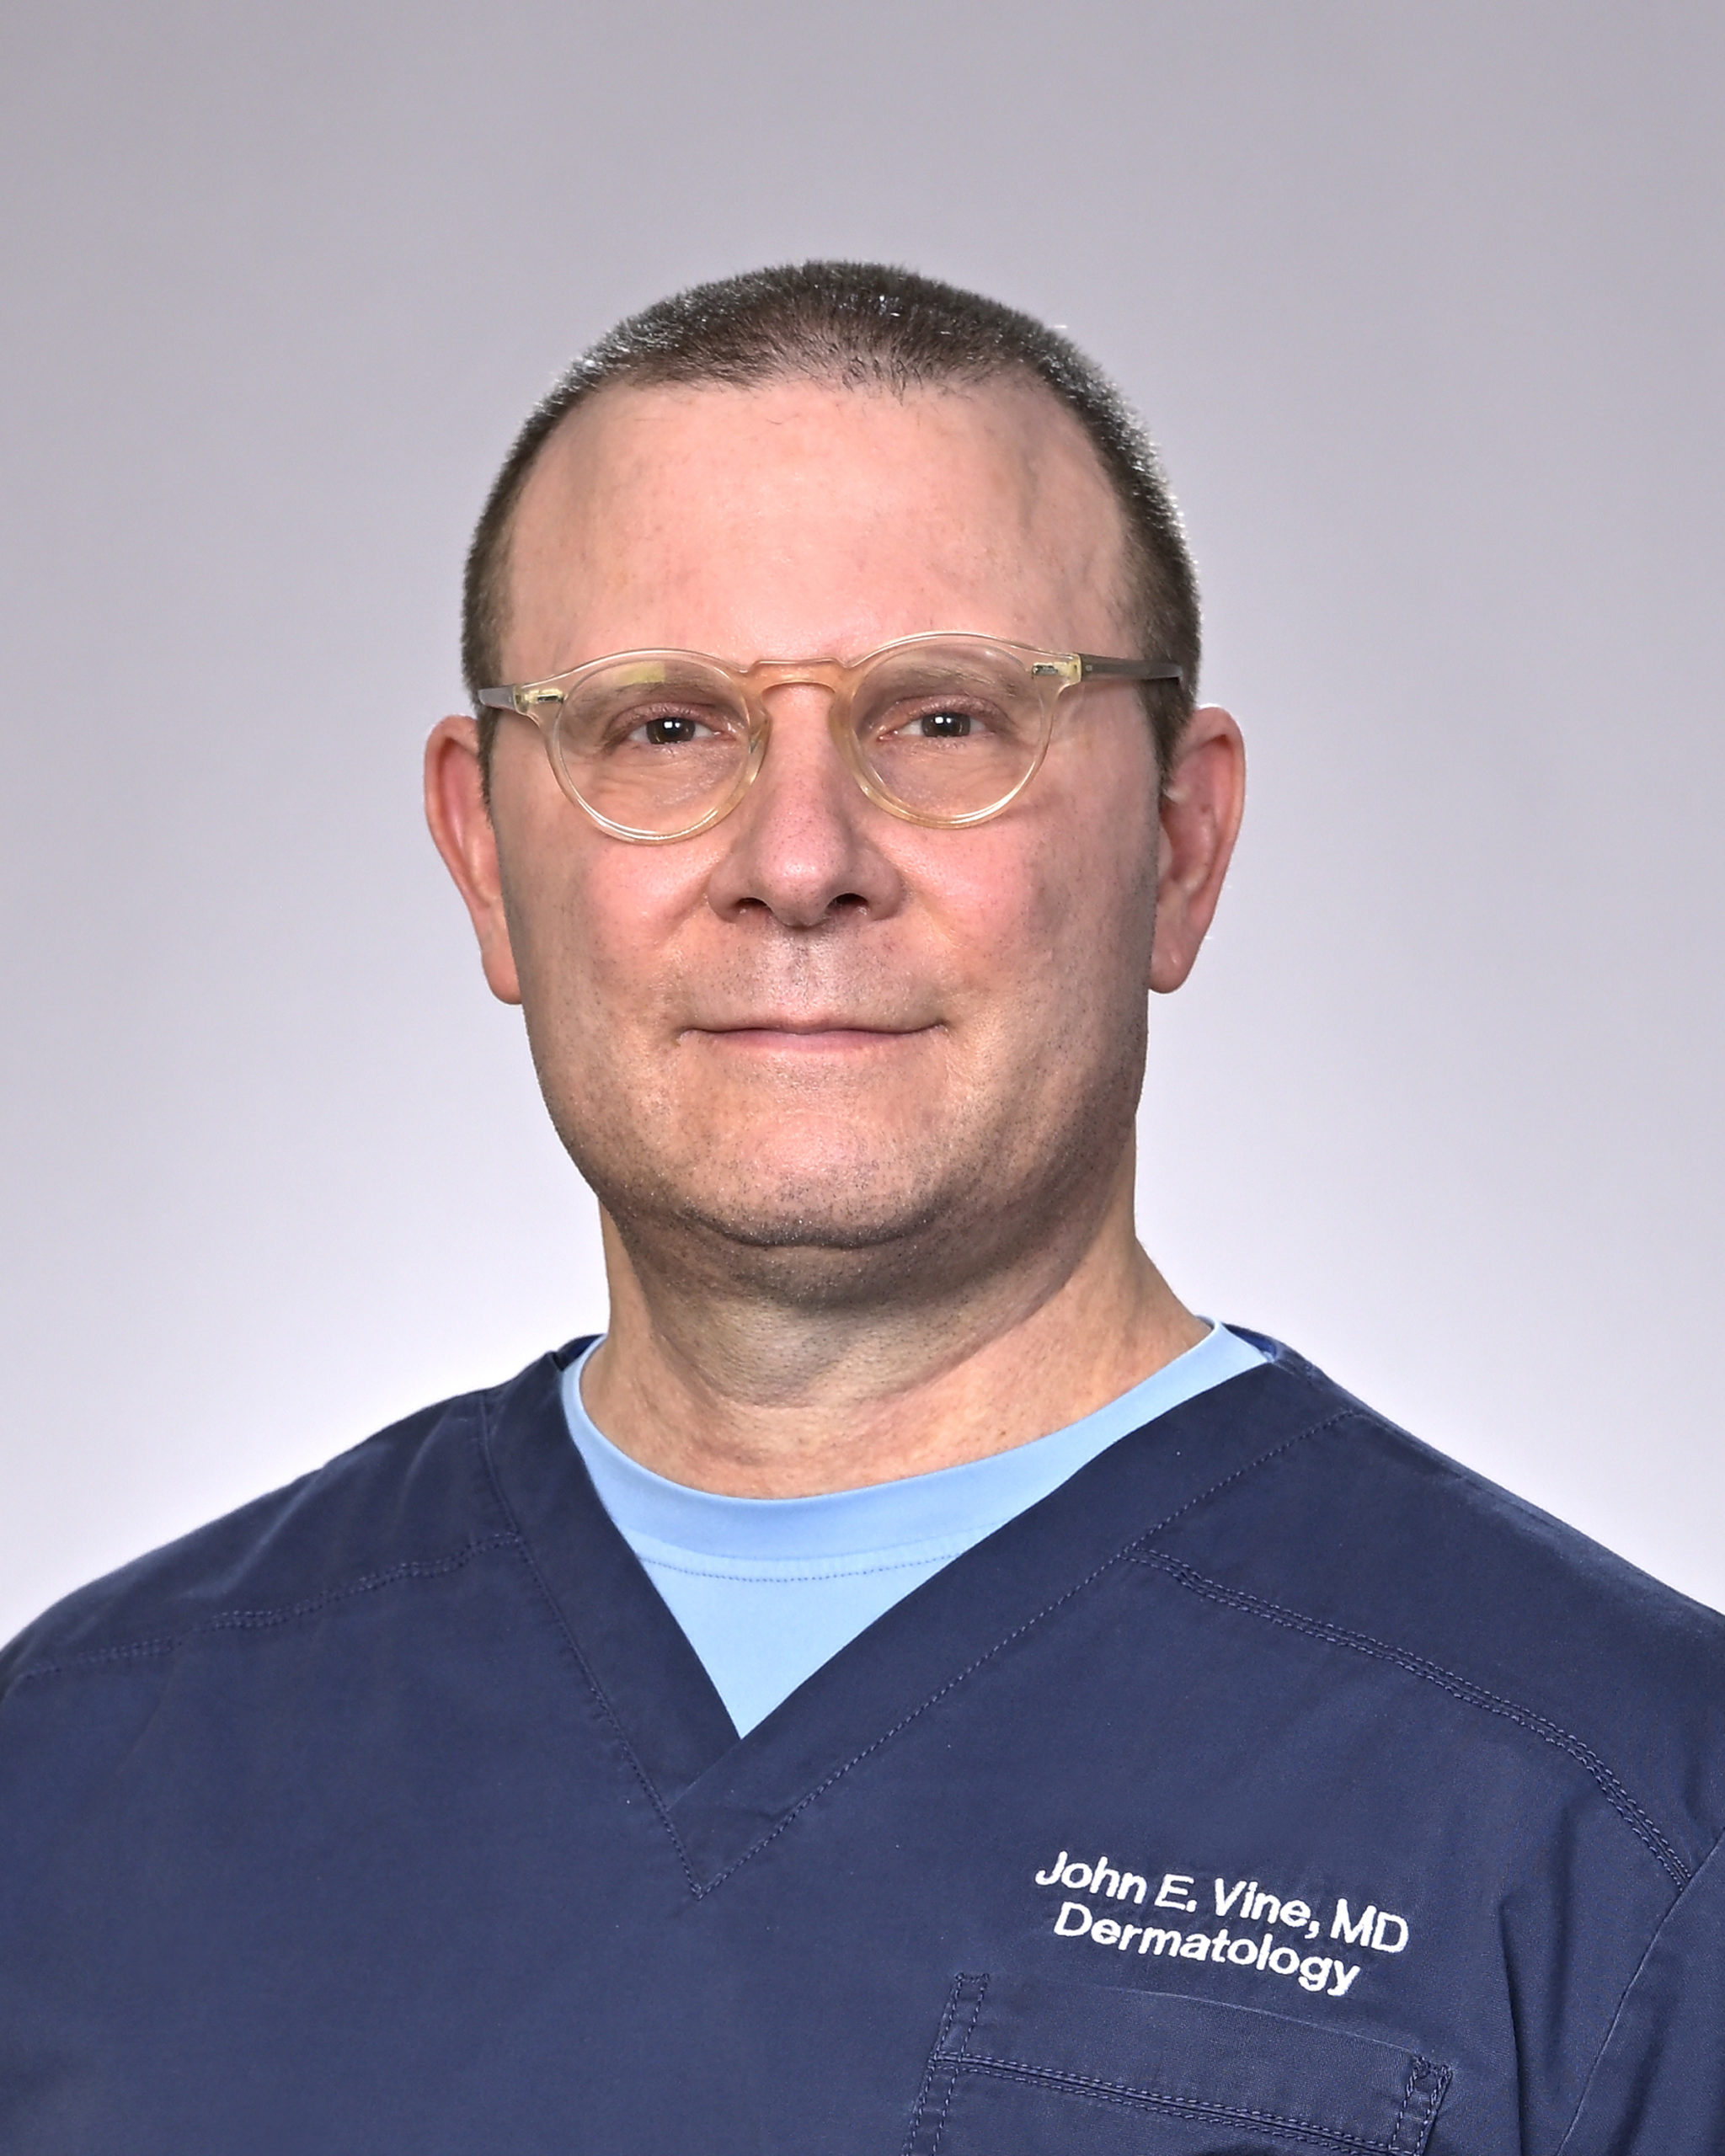 John E. Vine, M.D - Medical & Cosmetic Procedures Specialist